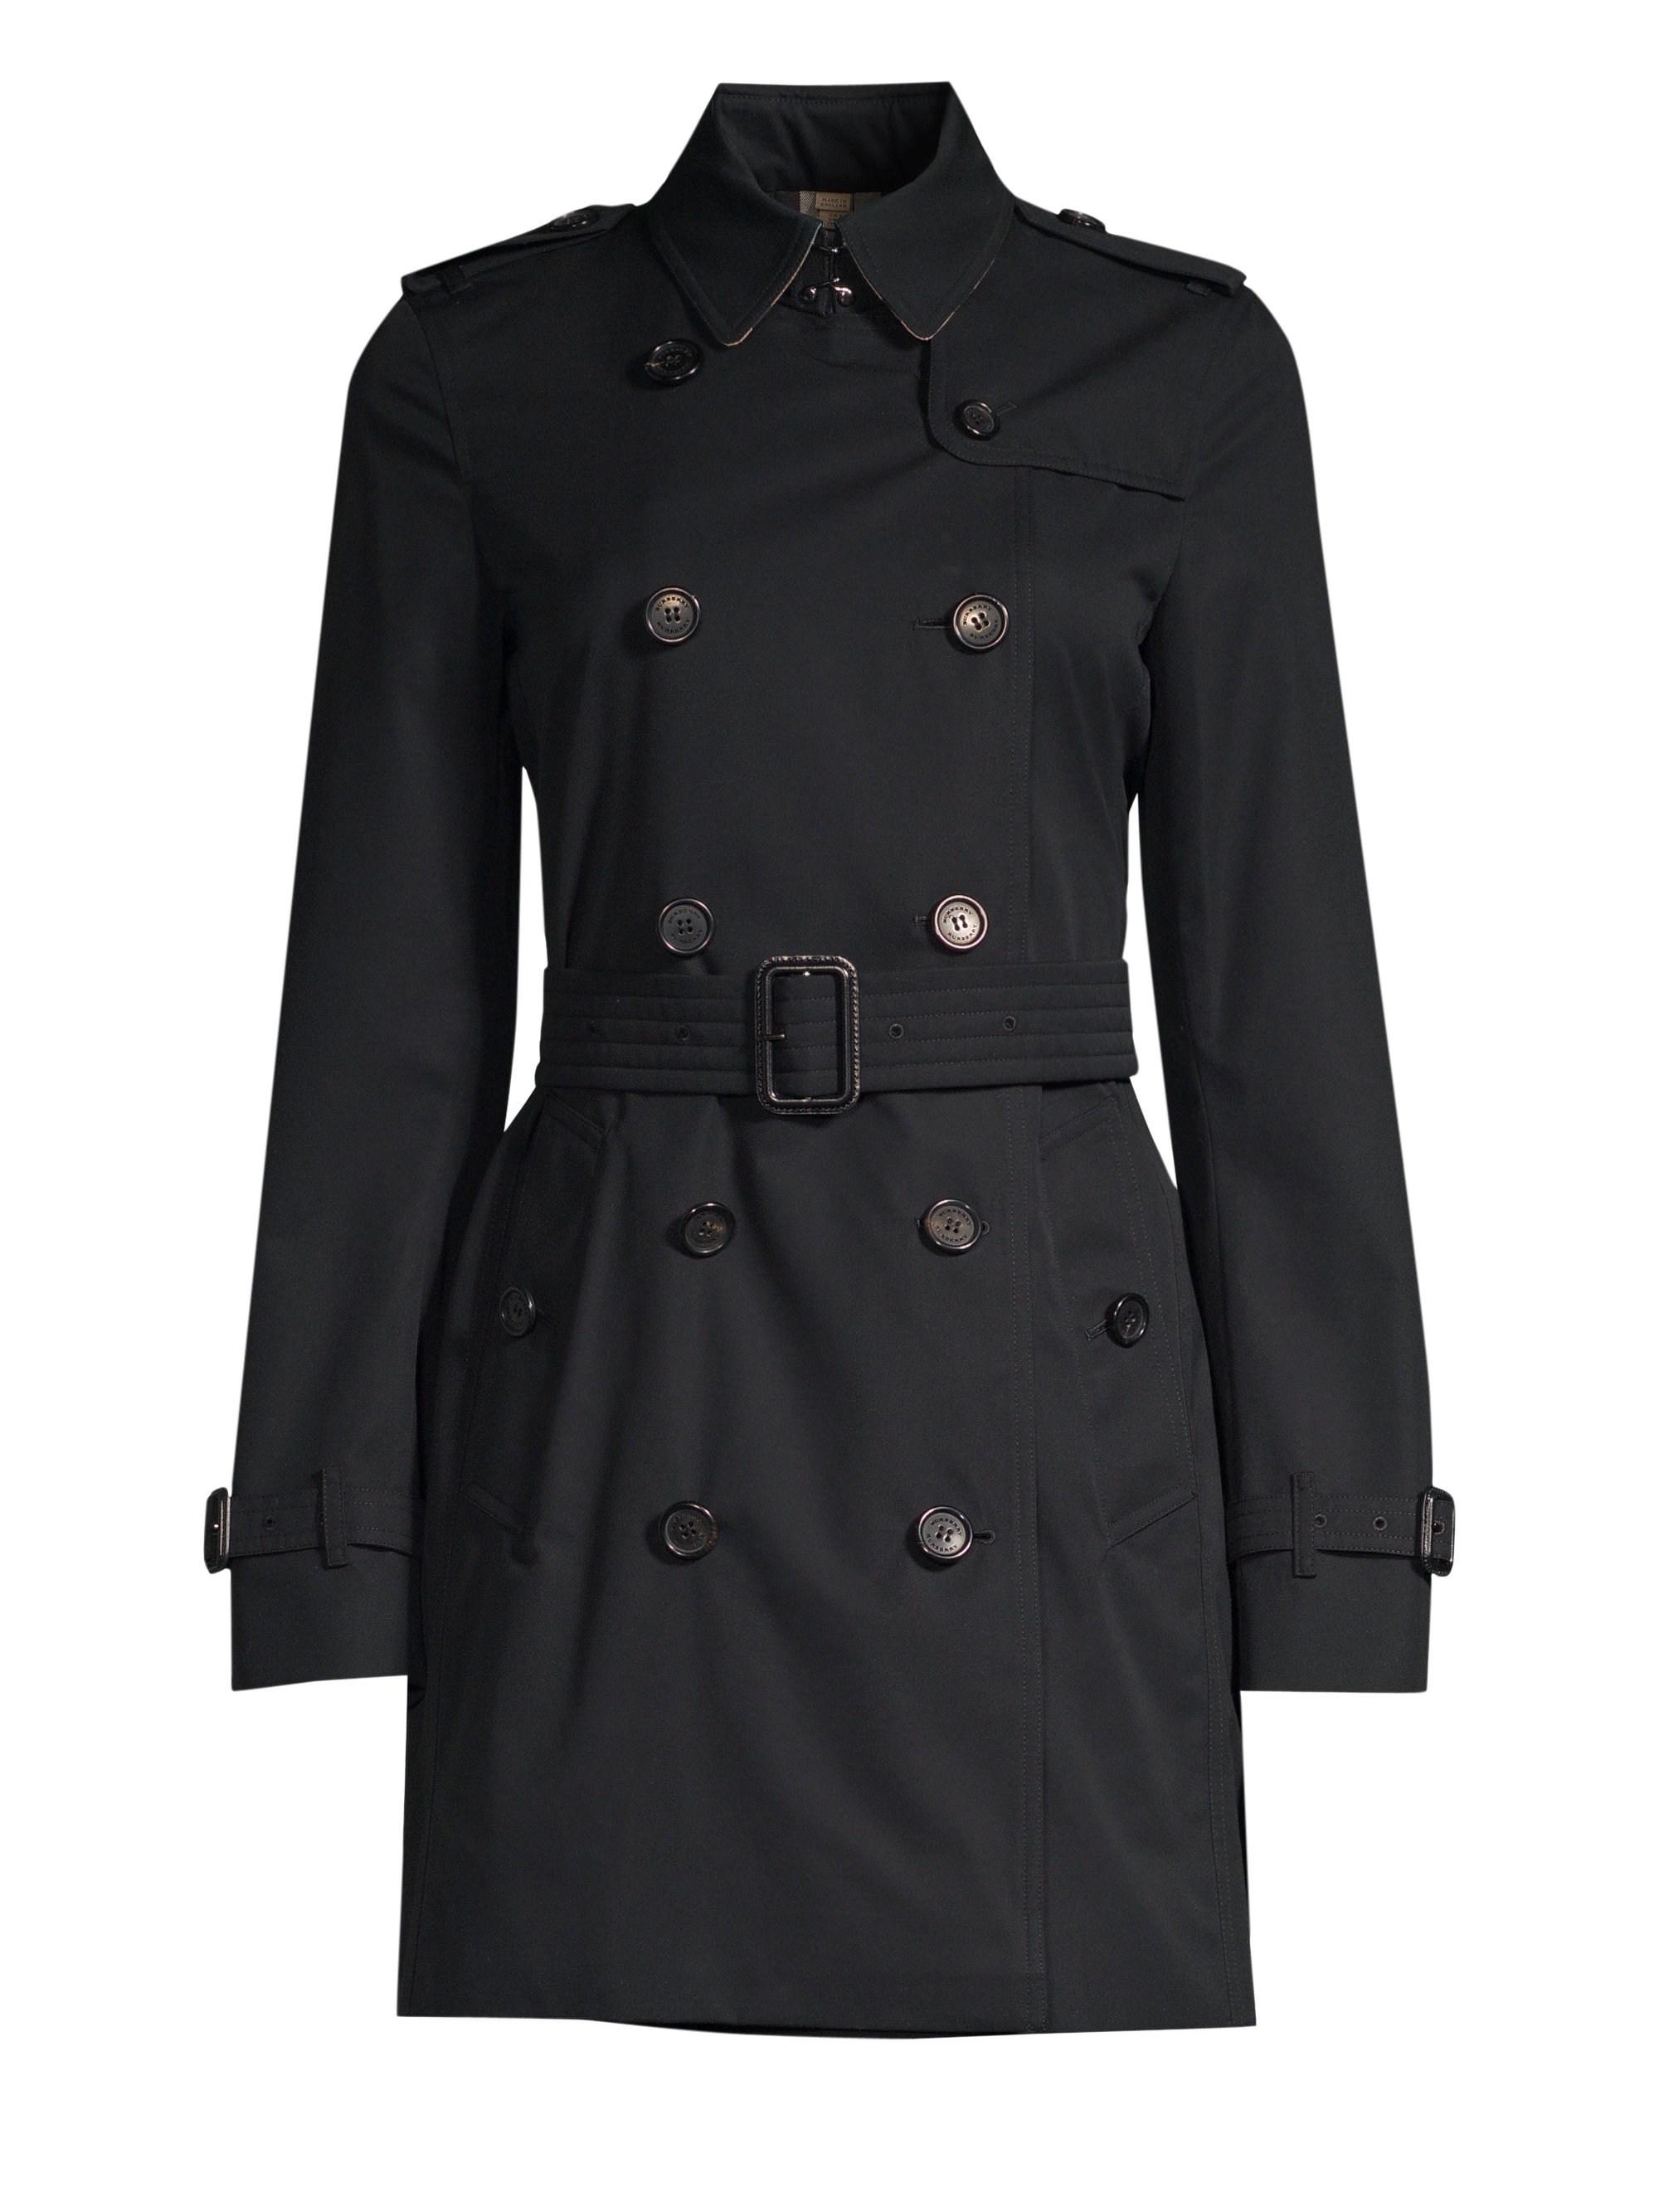 Lyst - Burberry Kensington Mid-length Heritage Trench Coat in Black